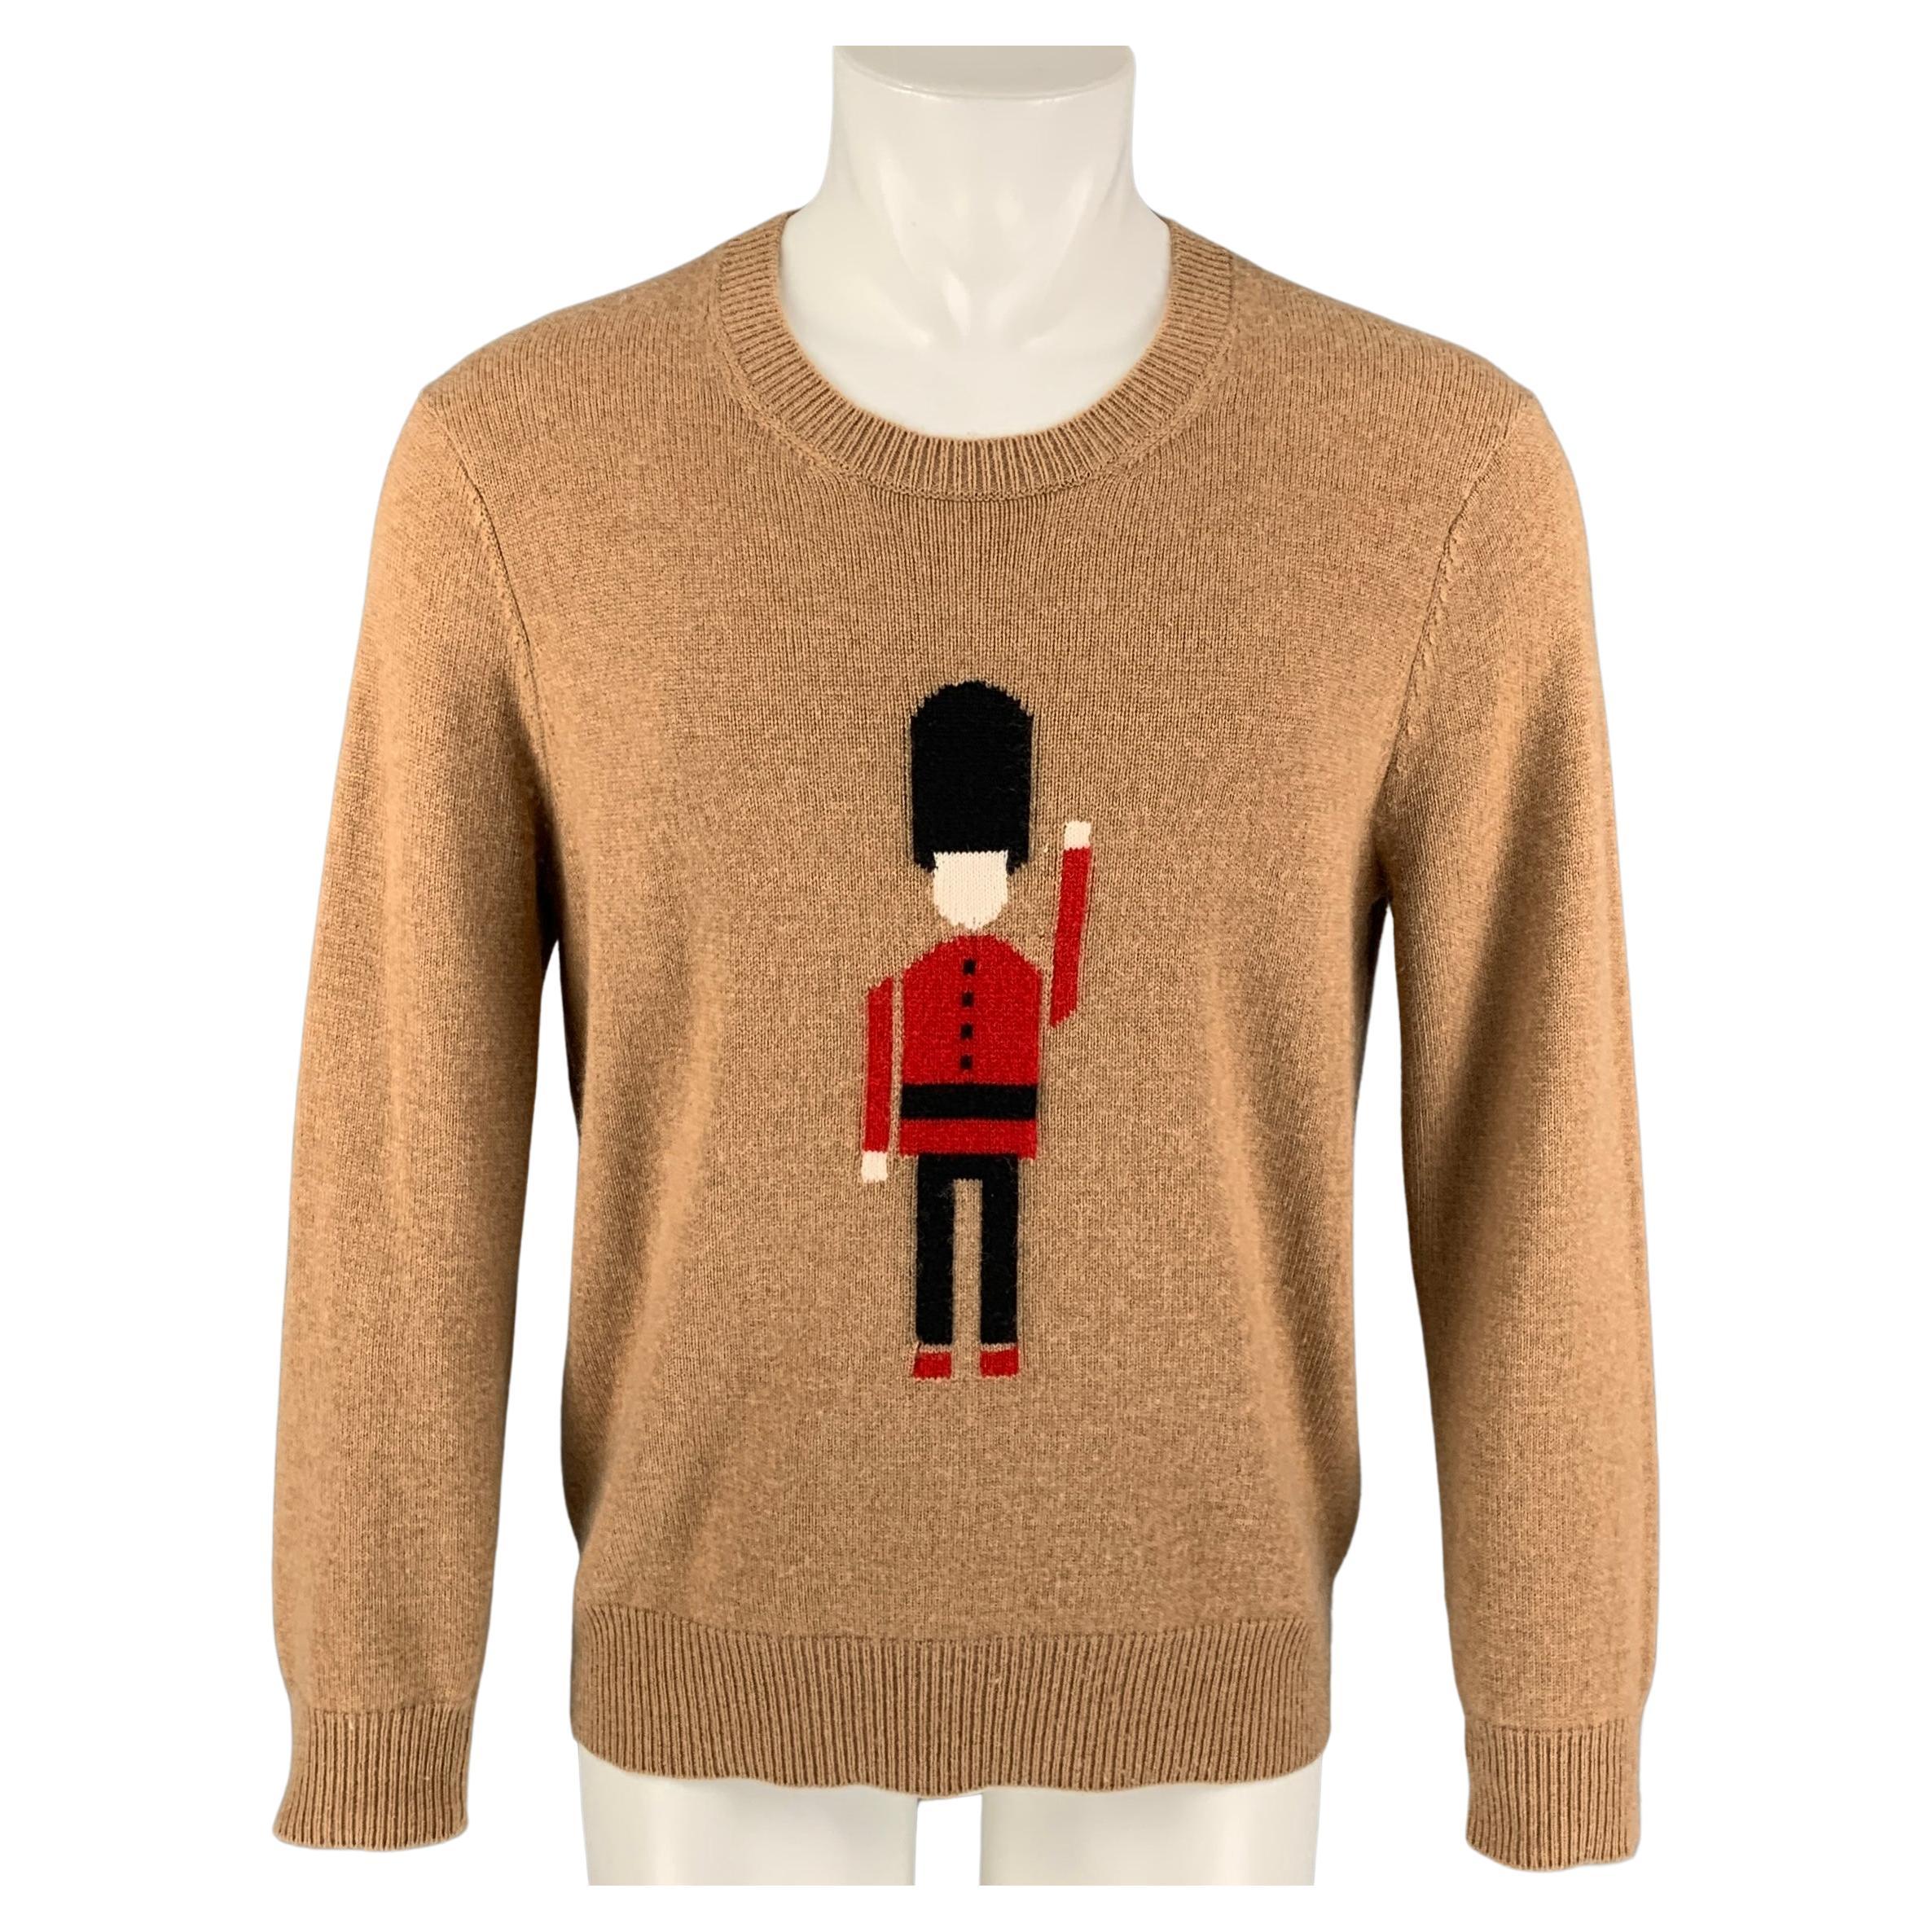 BURBERRY PRORSUM Pre-Fall 2013 Size L Tan & Red Cashmere Solider Guard Sweater